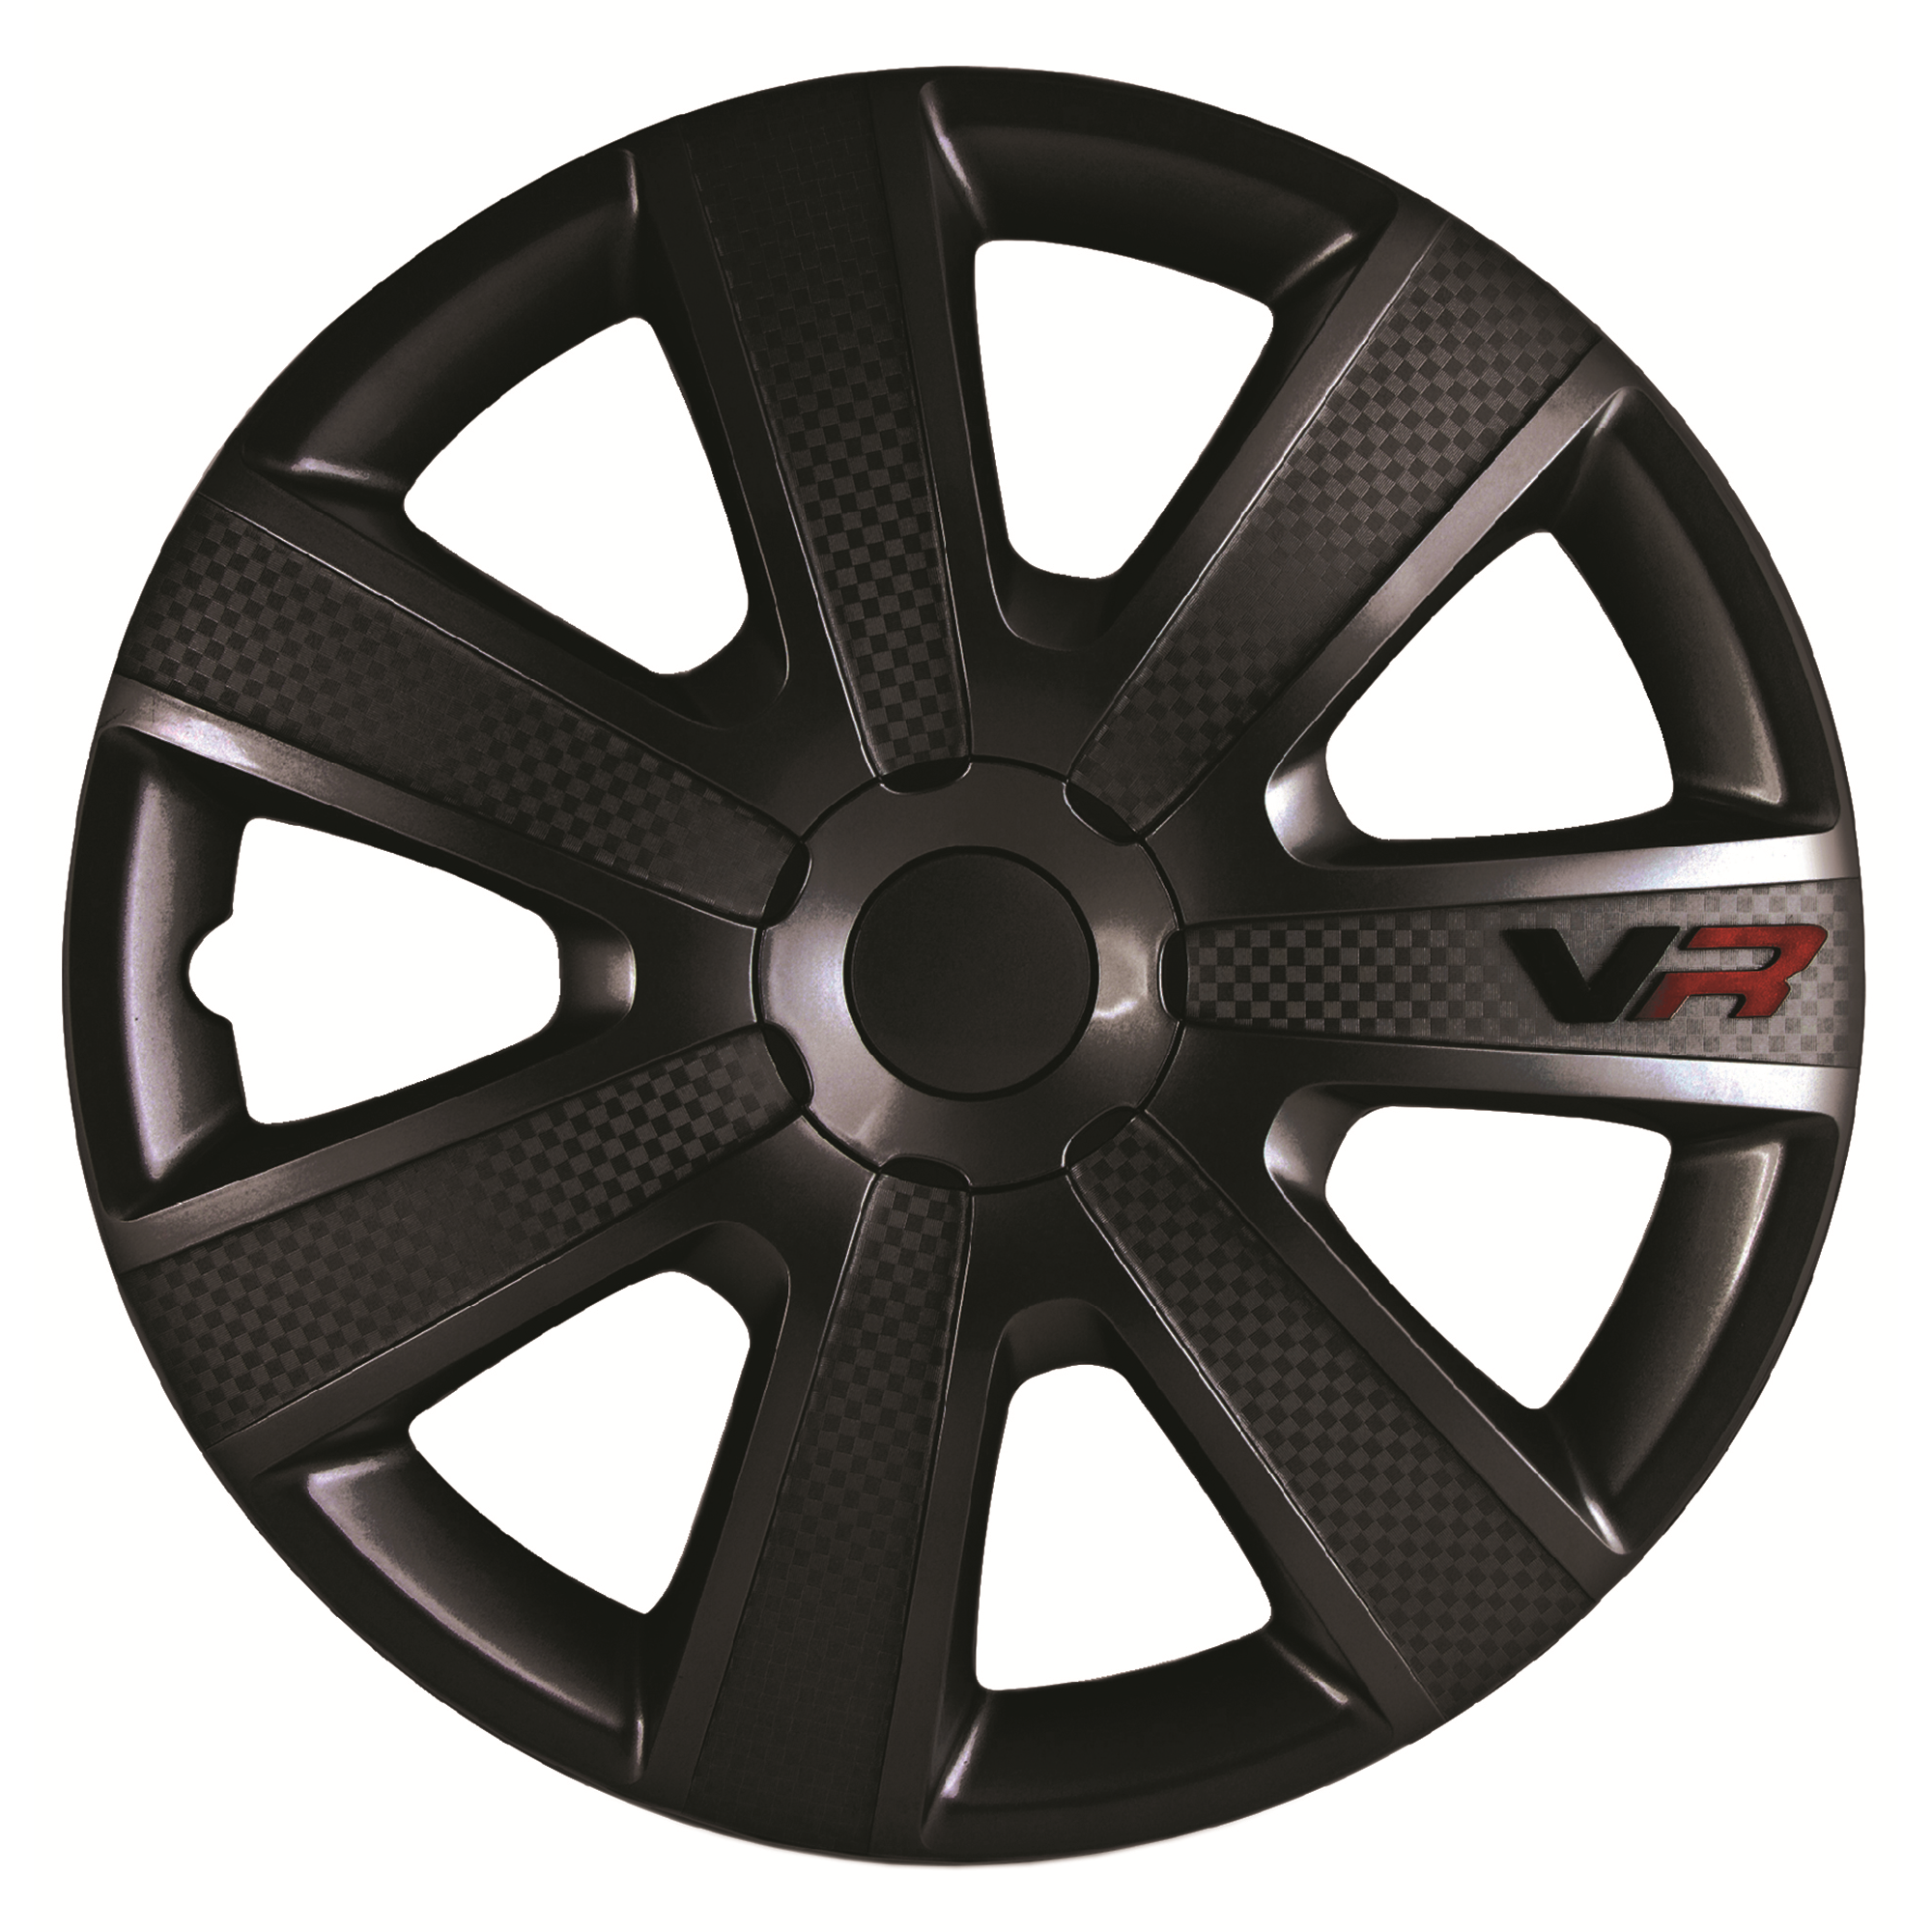 Alpena 15 inch VR Carbon Black Wheel Cover Kit (4 Pack)